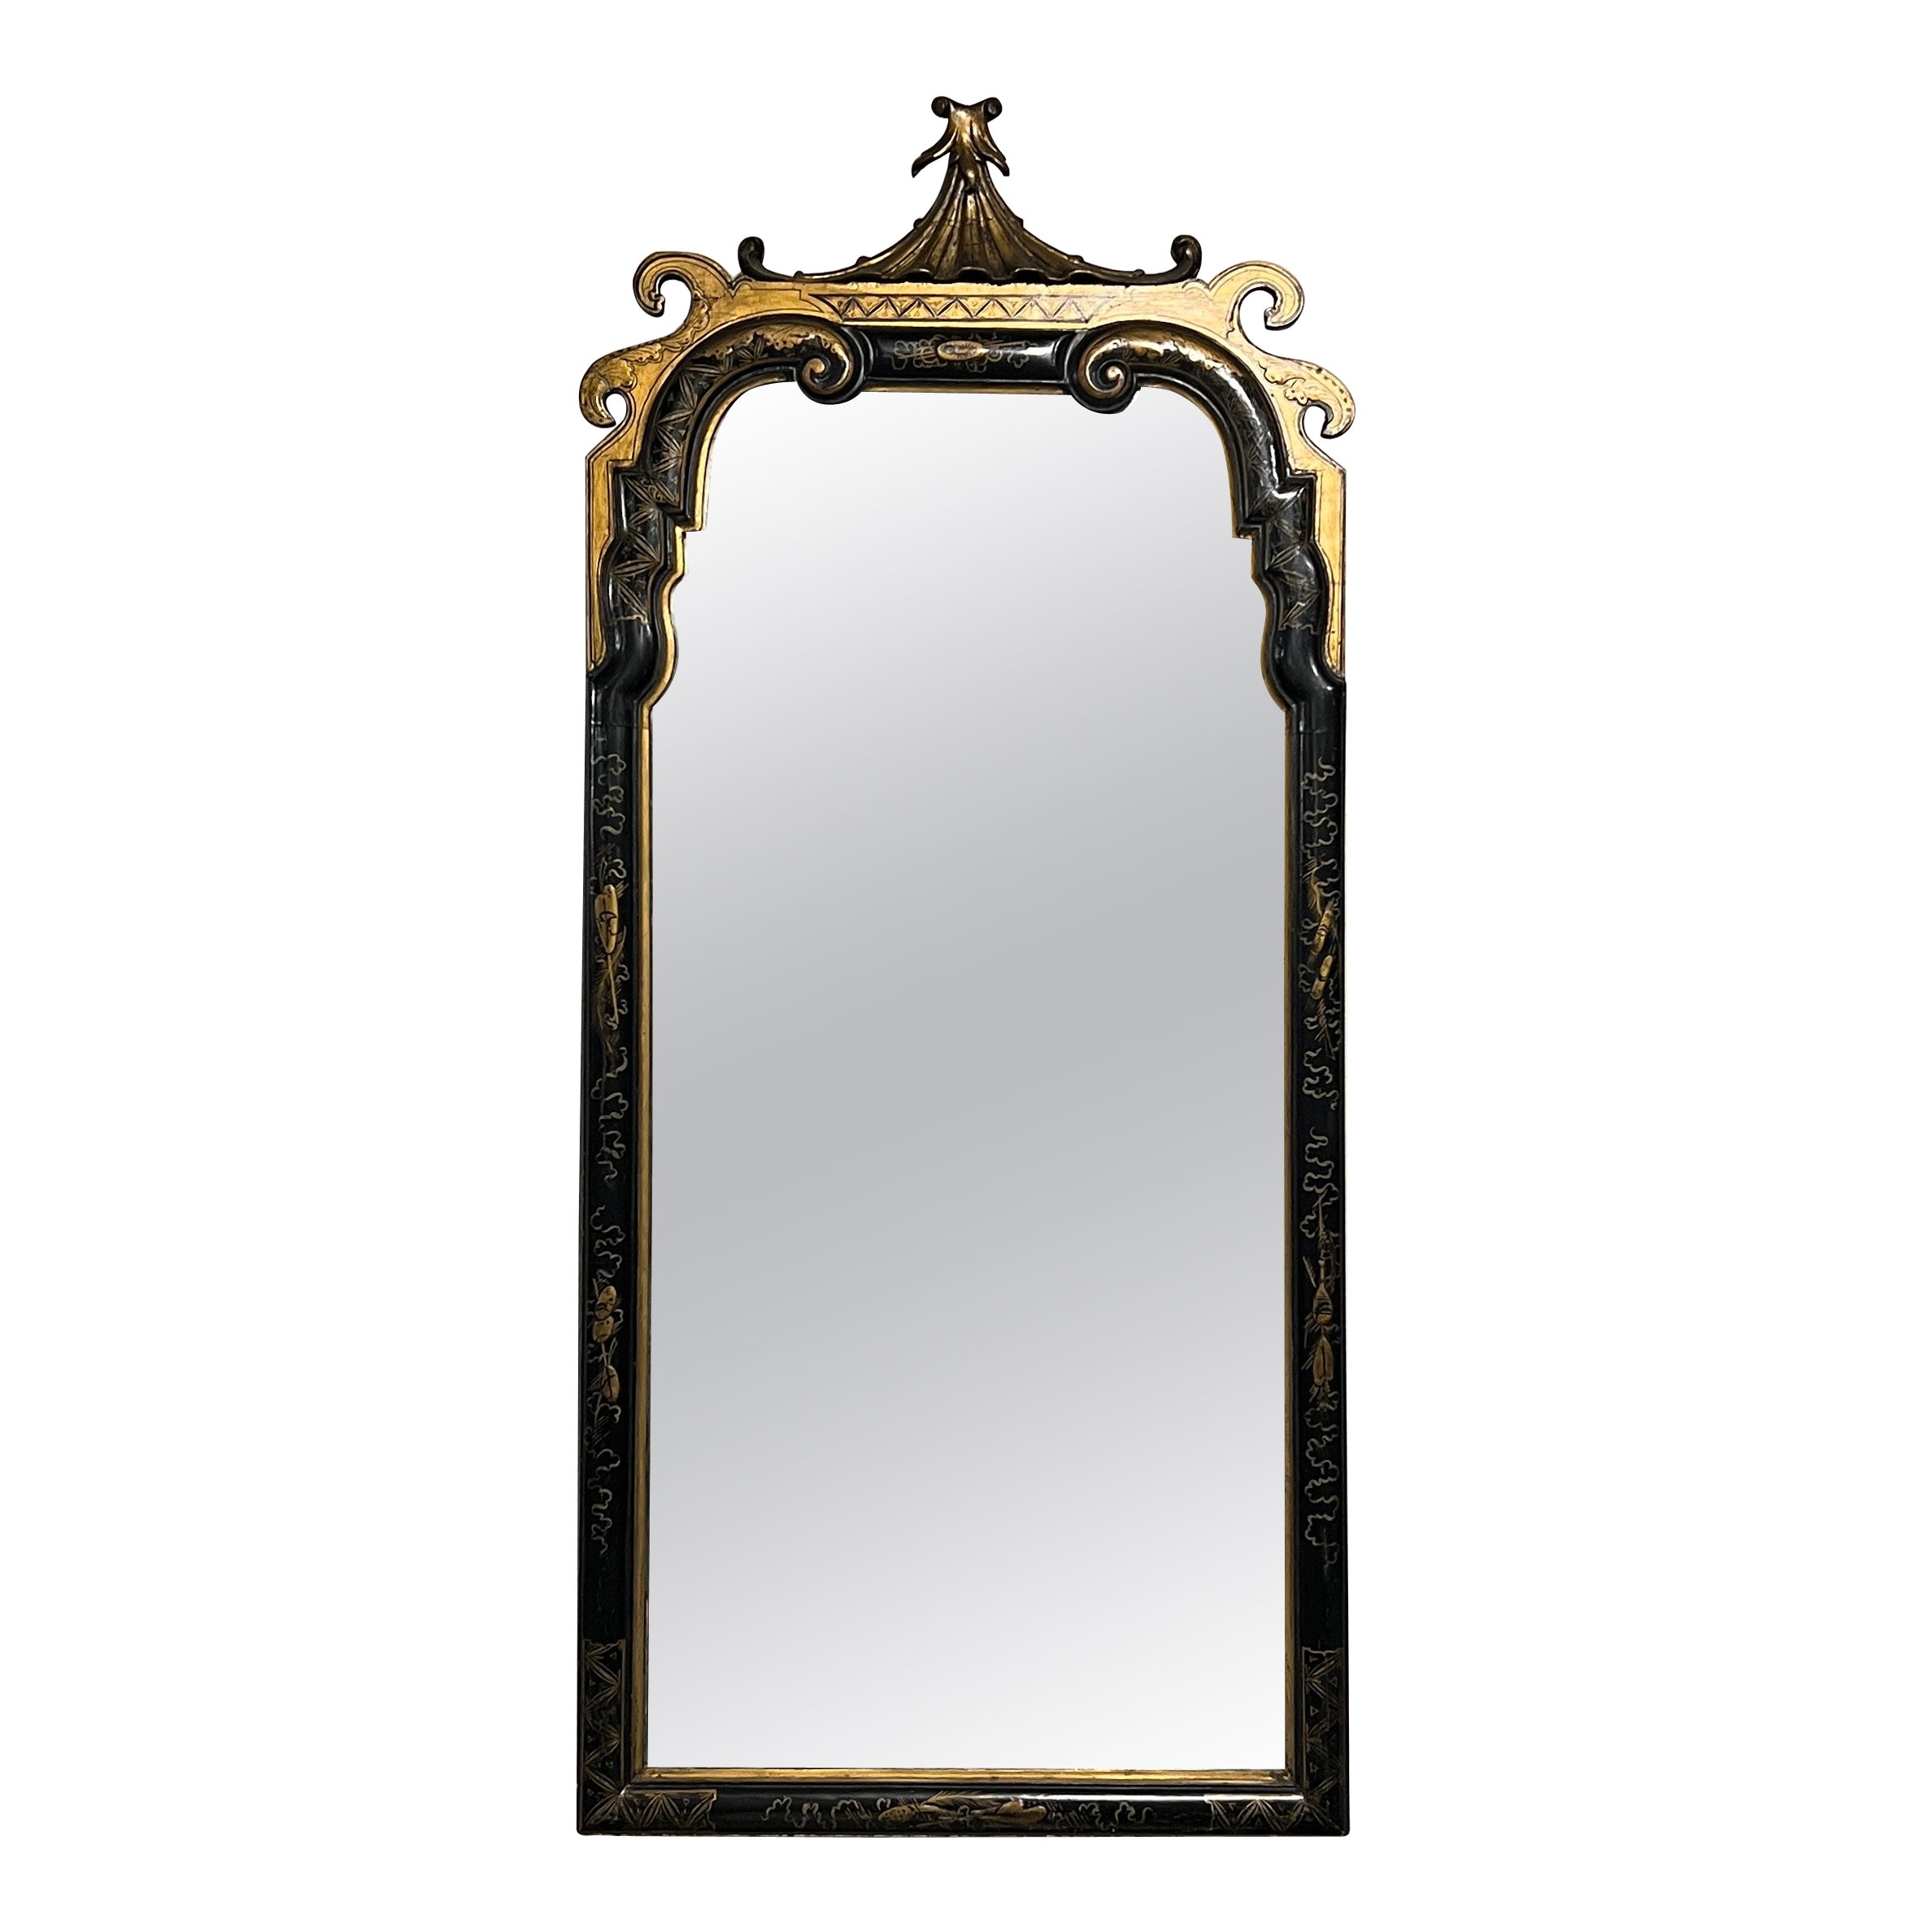 Antique English Chinoiserie Lacquer Mirror, Circa 1890-1910. For Sale